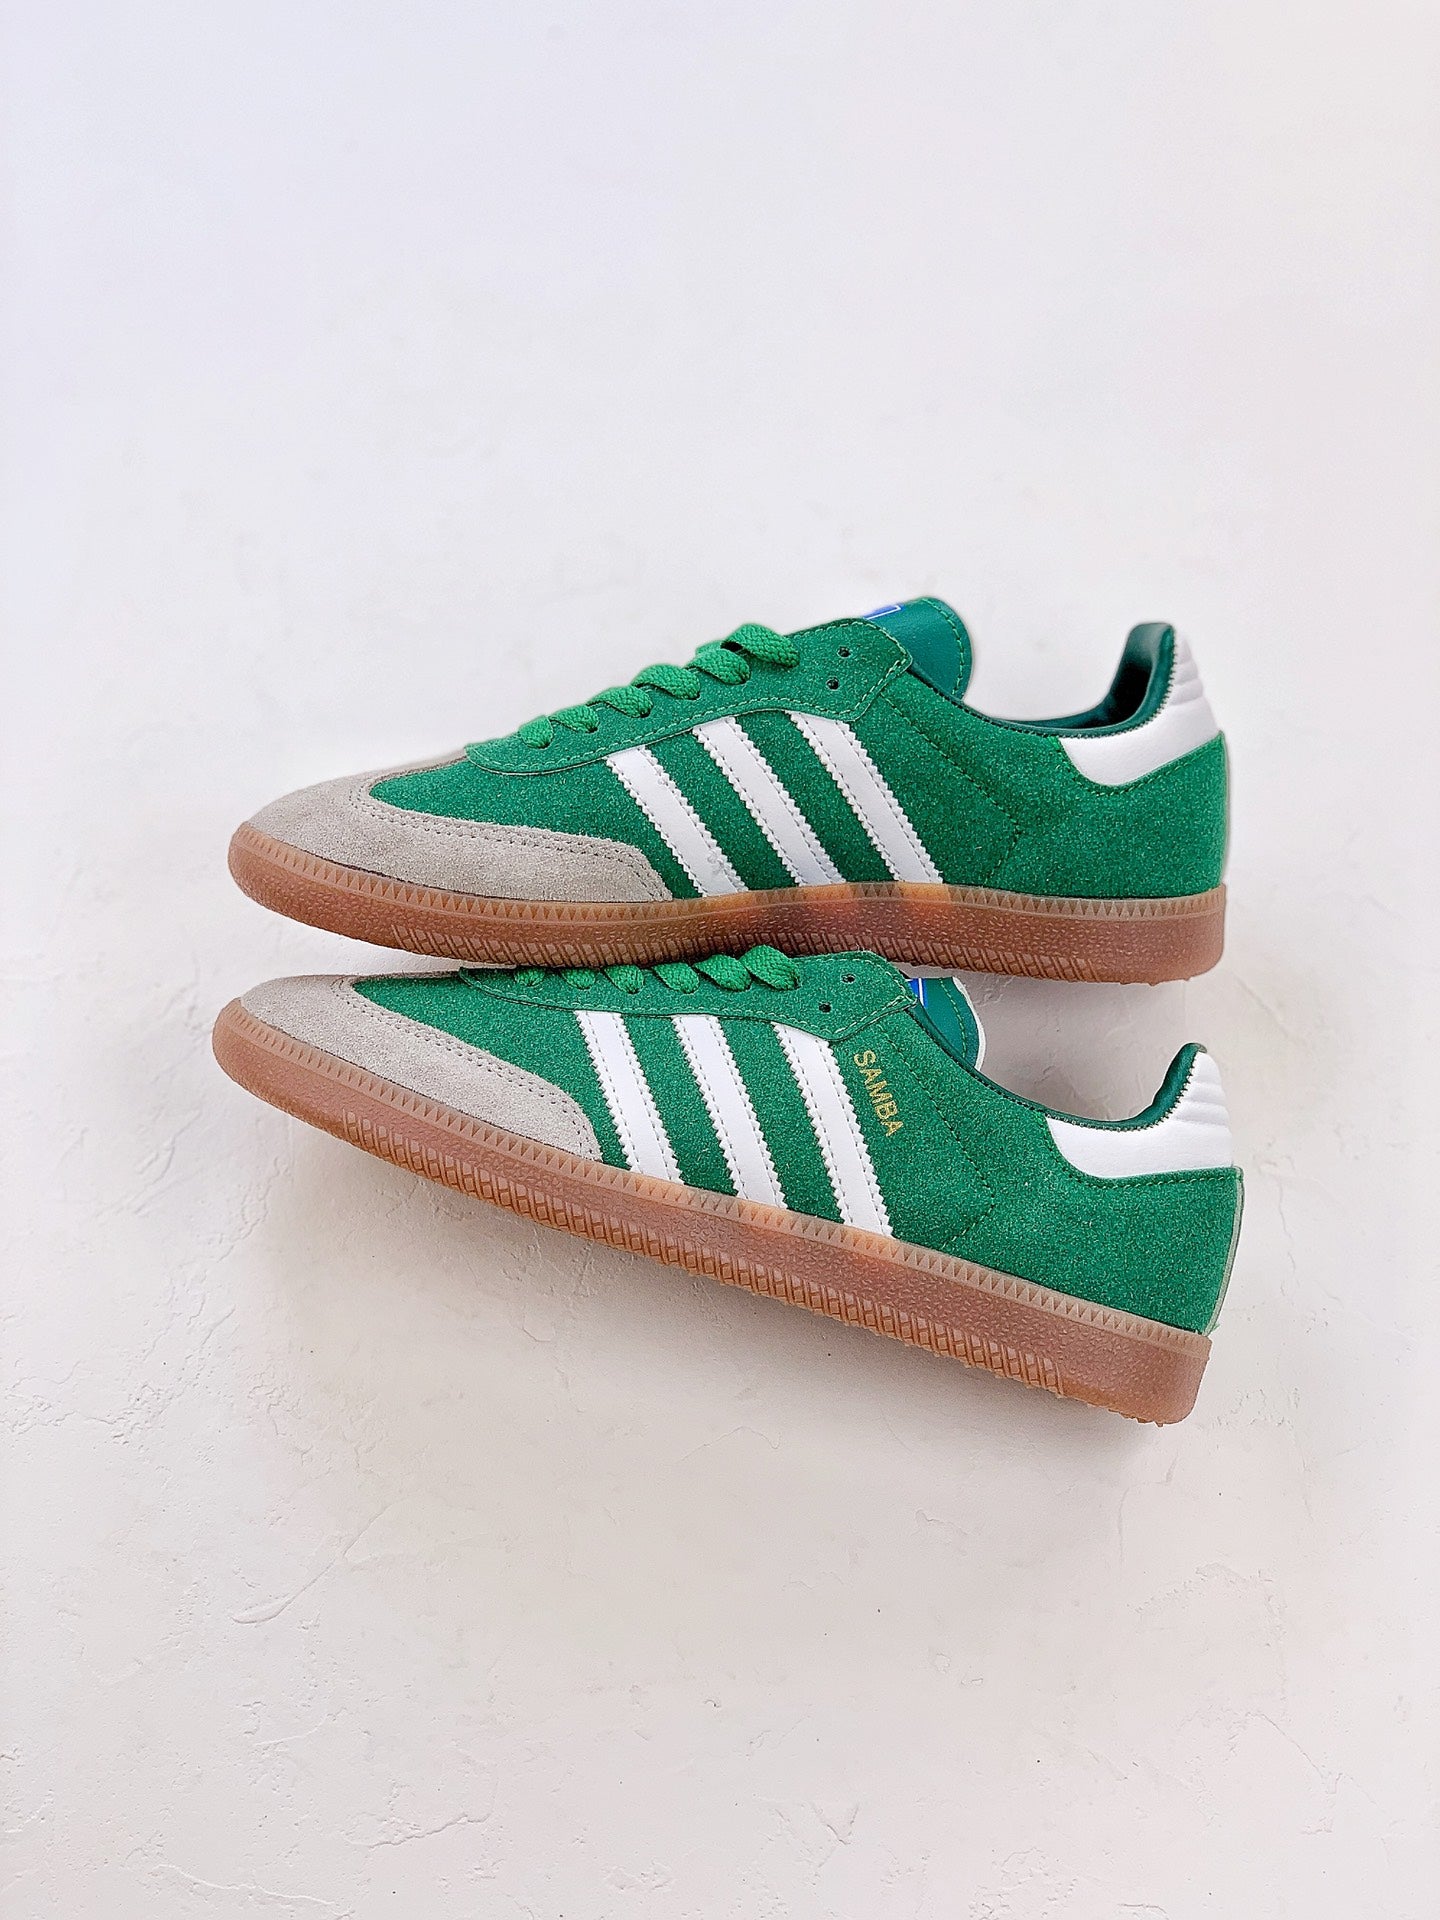 Adidas samba green beige shoes